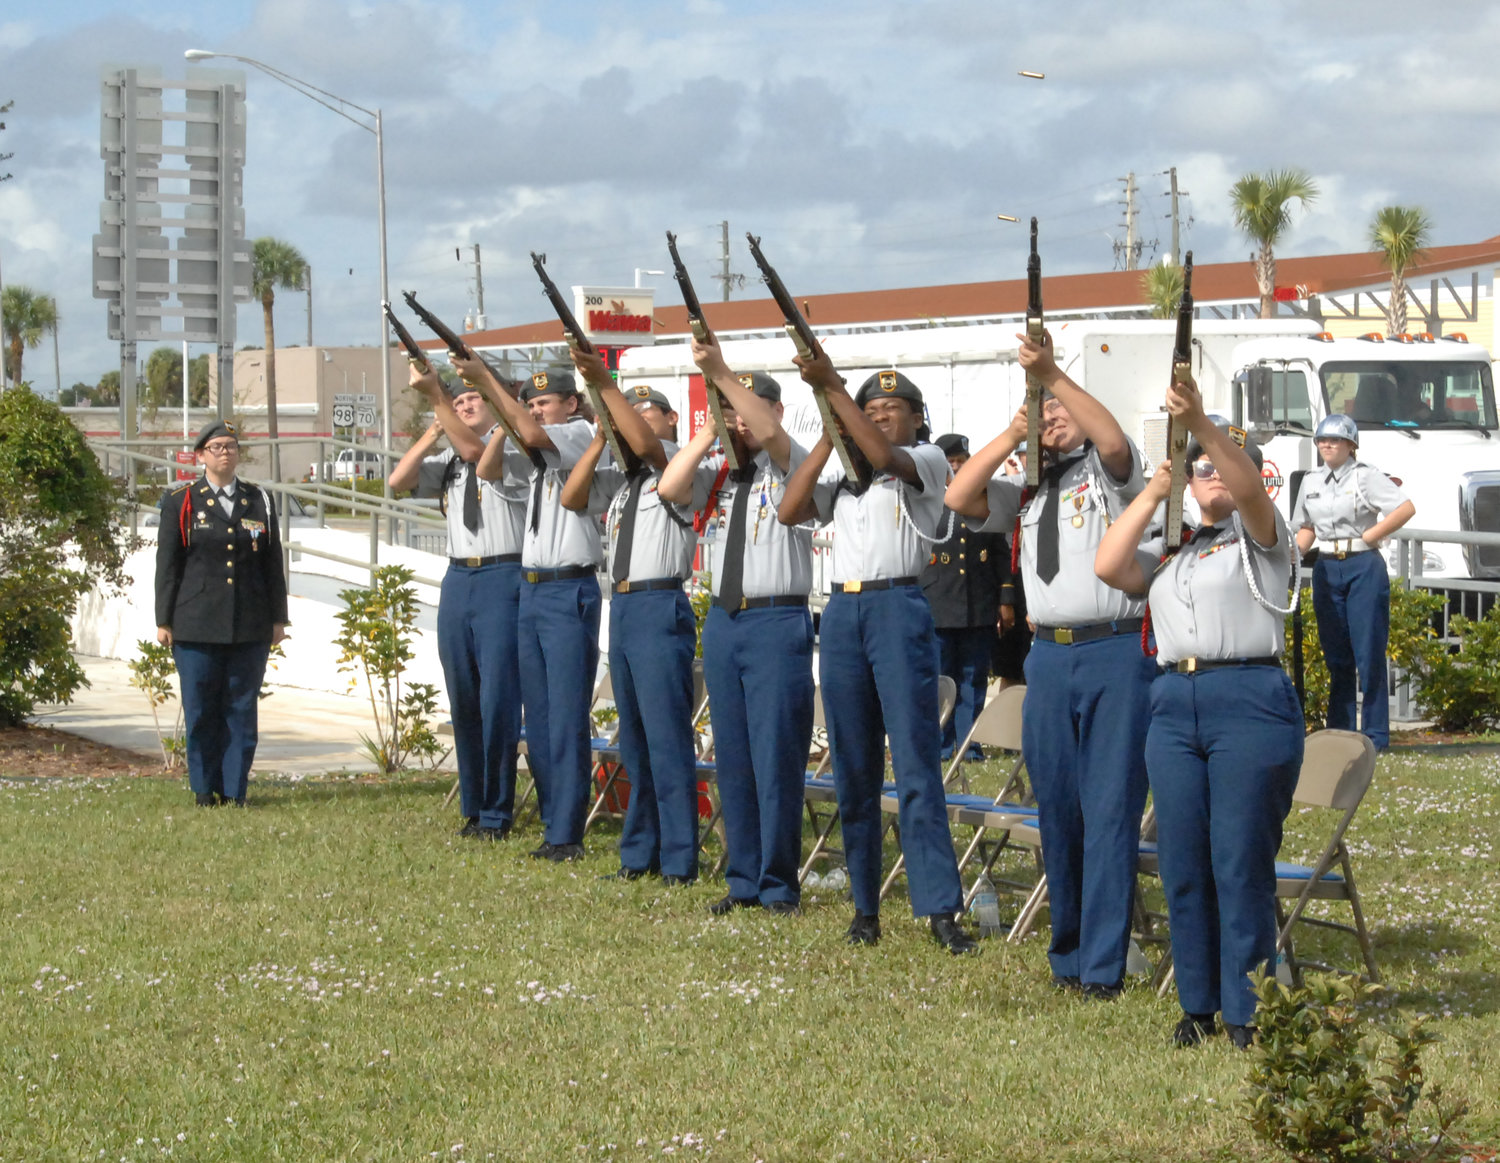 Okeechobee High School JROTC Honor Guard presented the 21-gun salute to the veterans.